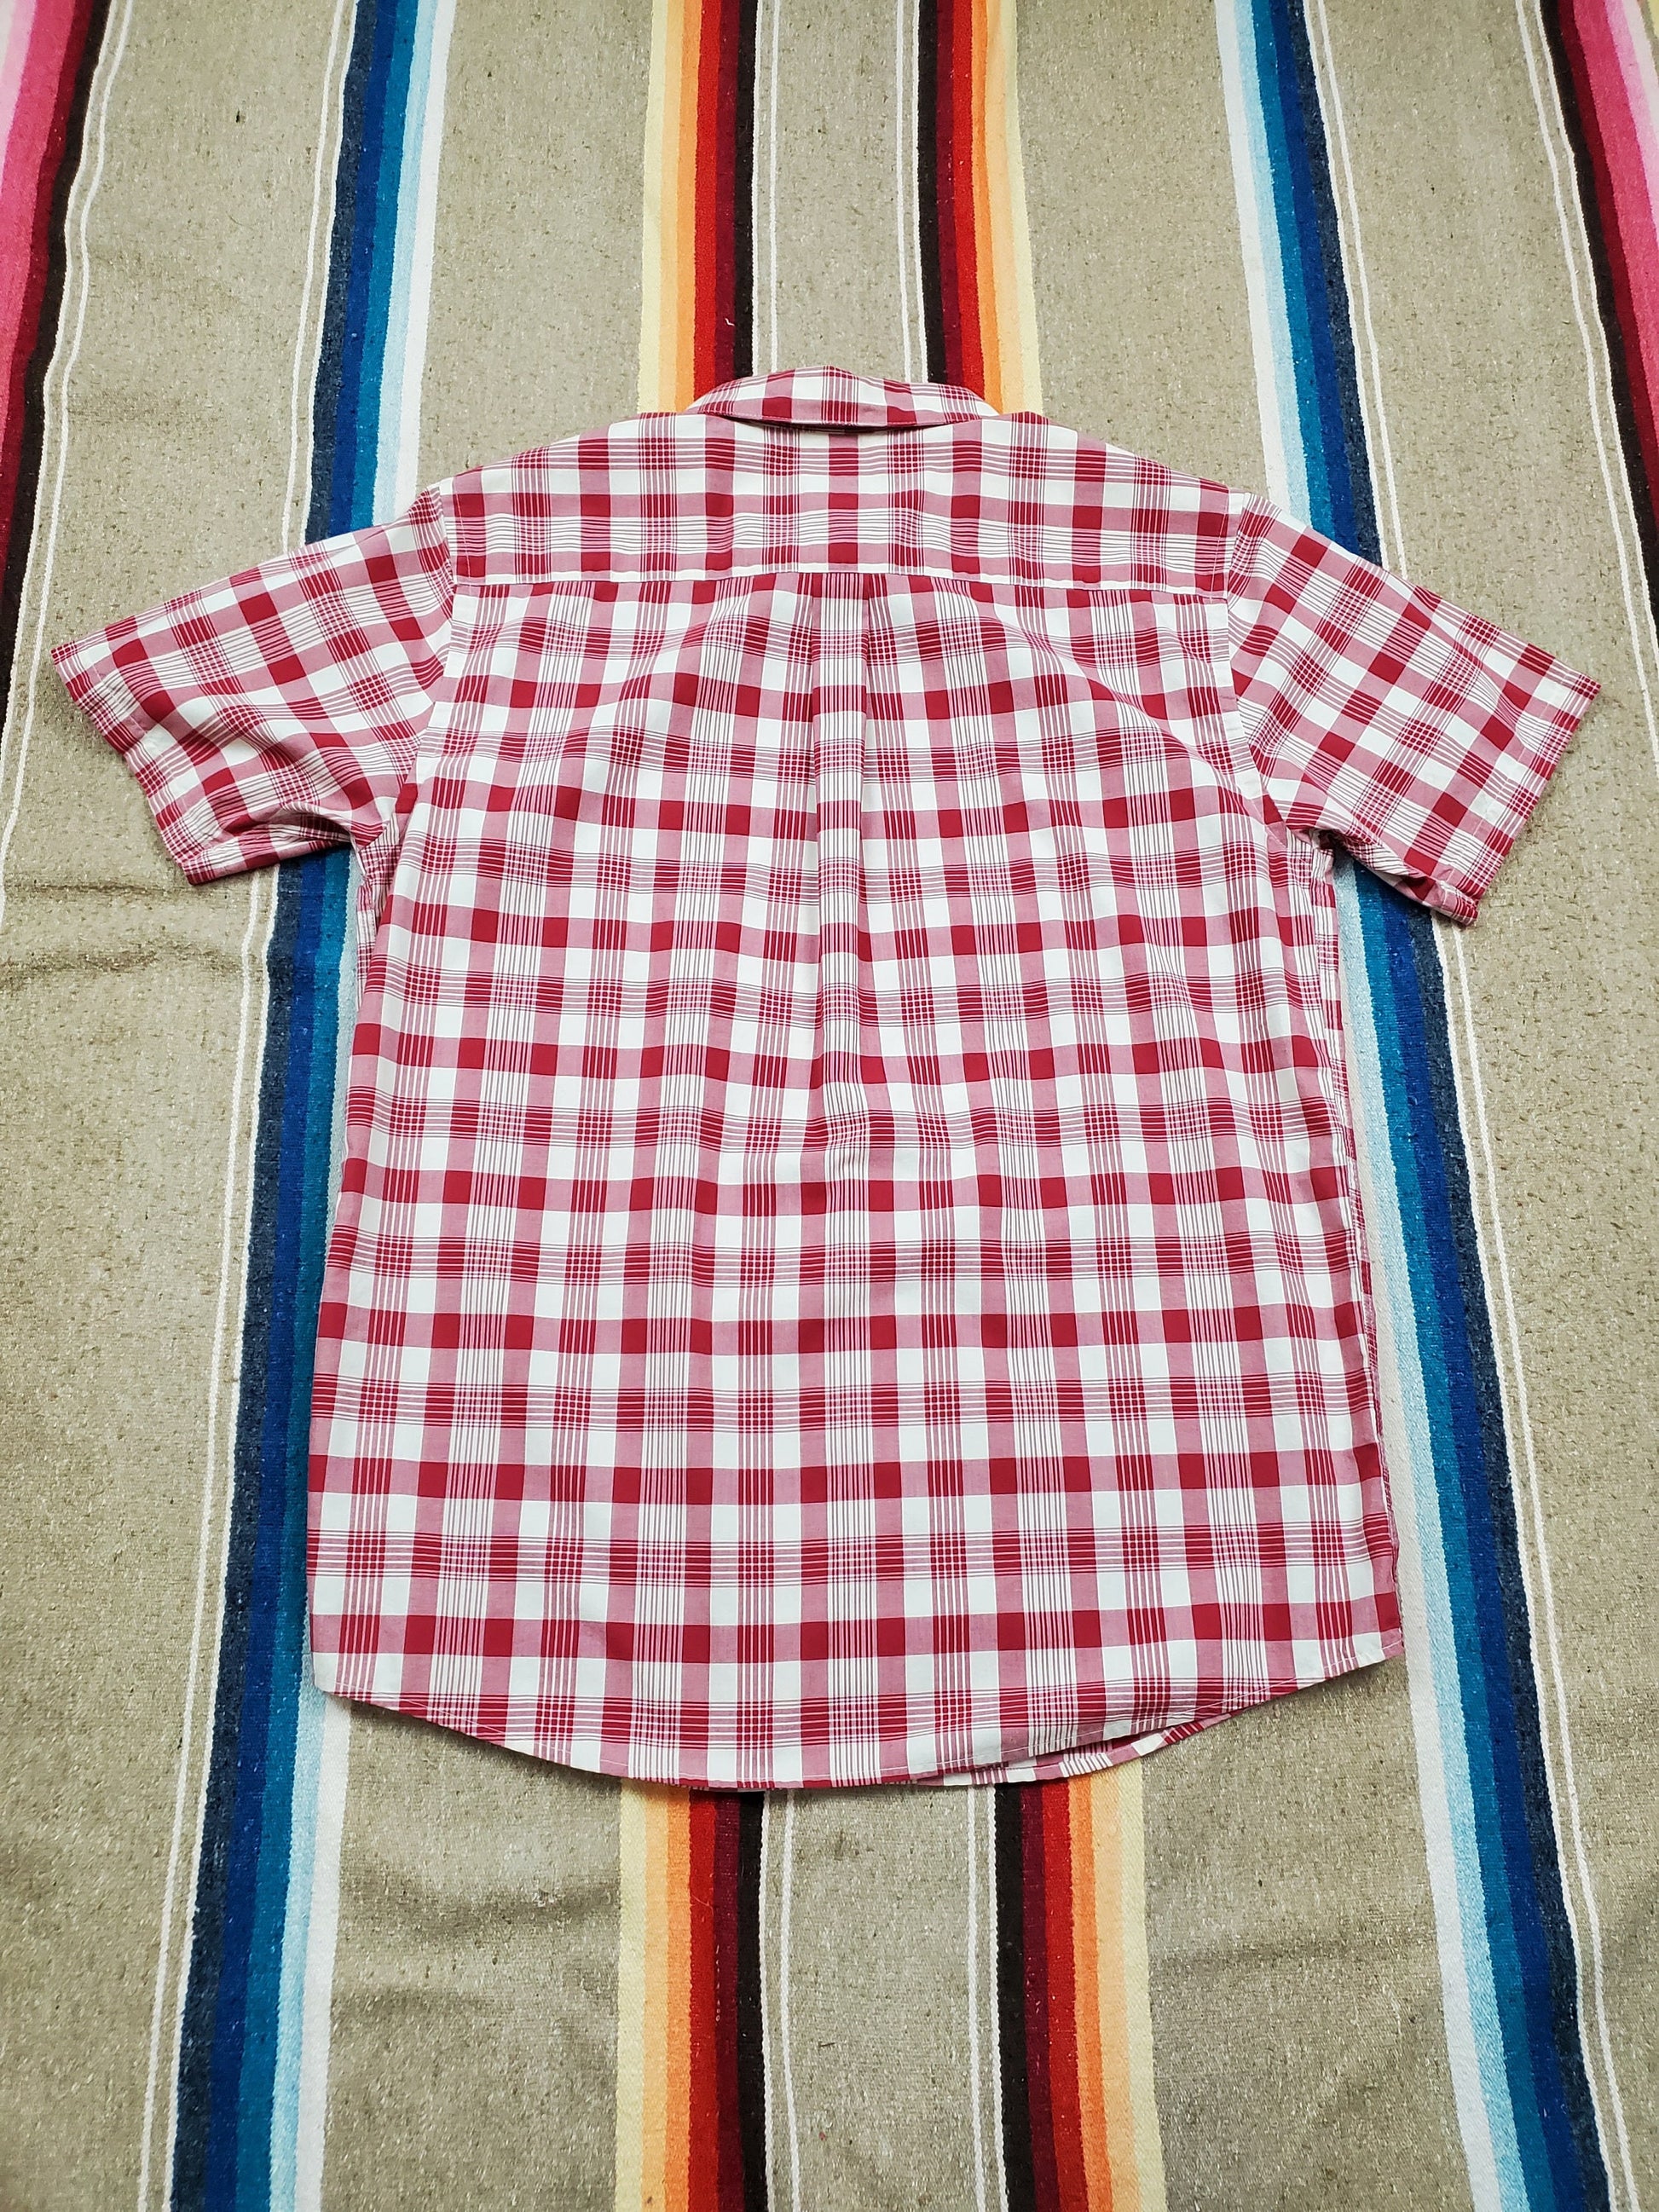 2010s Patagonia Plaid Shortsleeve Shirt Size M/L